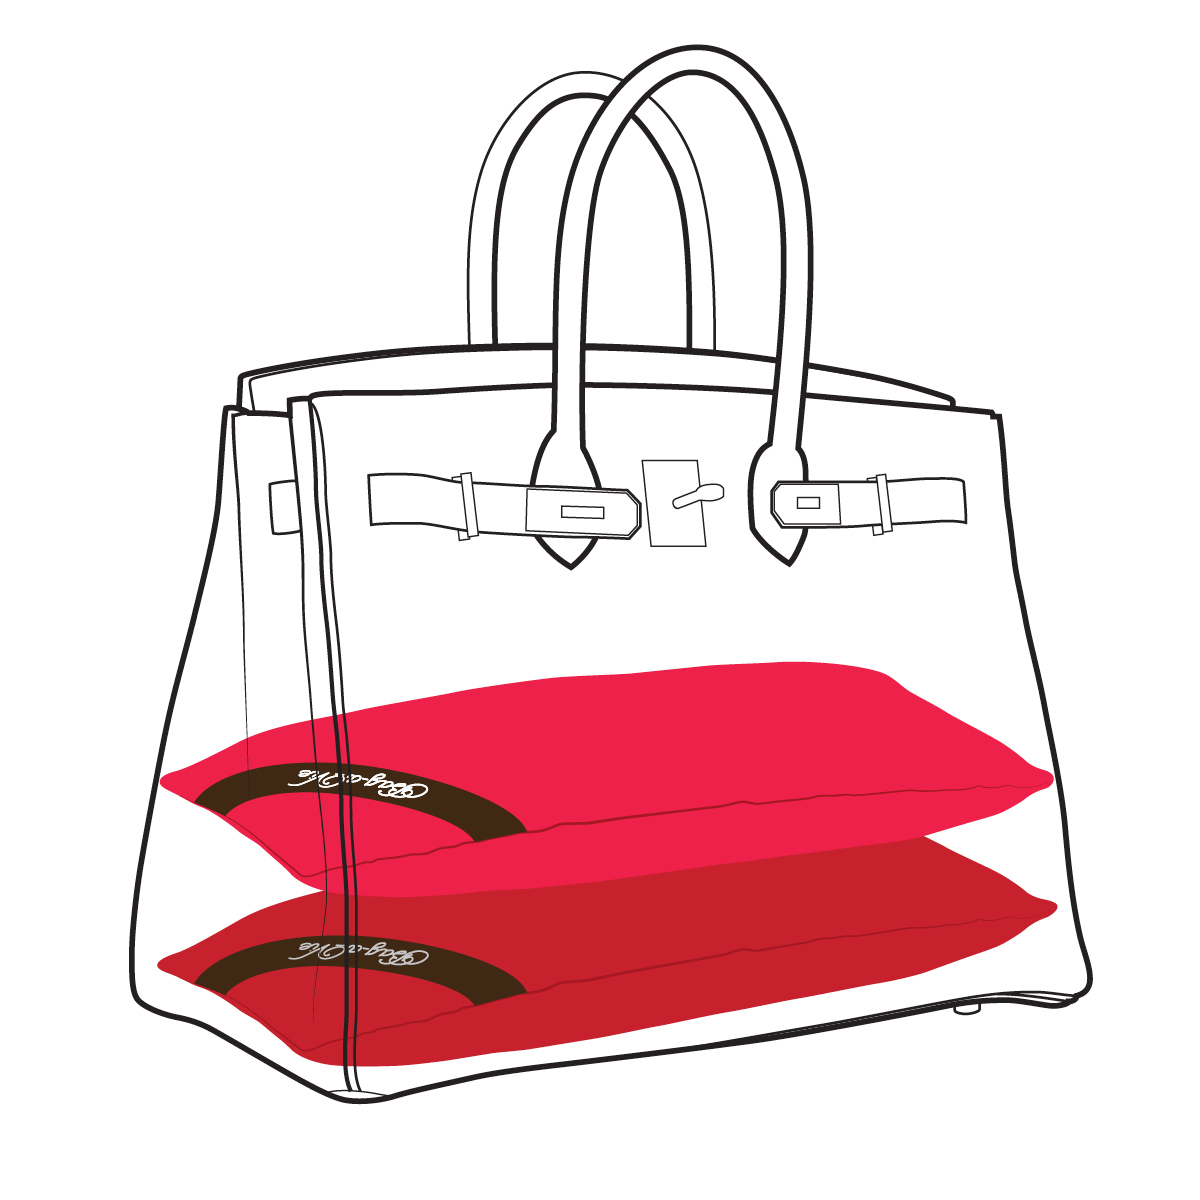  Bag-a-Vie Purse Shaper Pillow Insert - Black - Luxury Handbag  Shaper Insert for Women's Purses - Handbag Custom Pillow Purse Accessories  for Birkin 25 : Clothing, Shoes & Jewelry